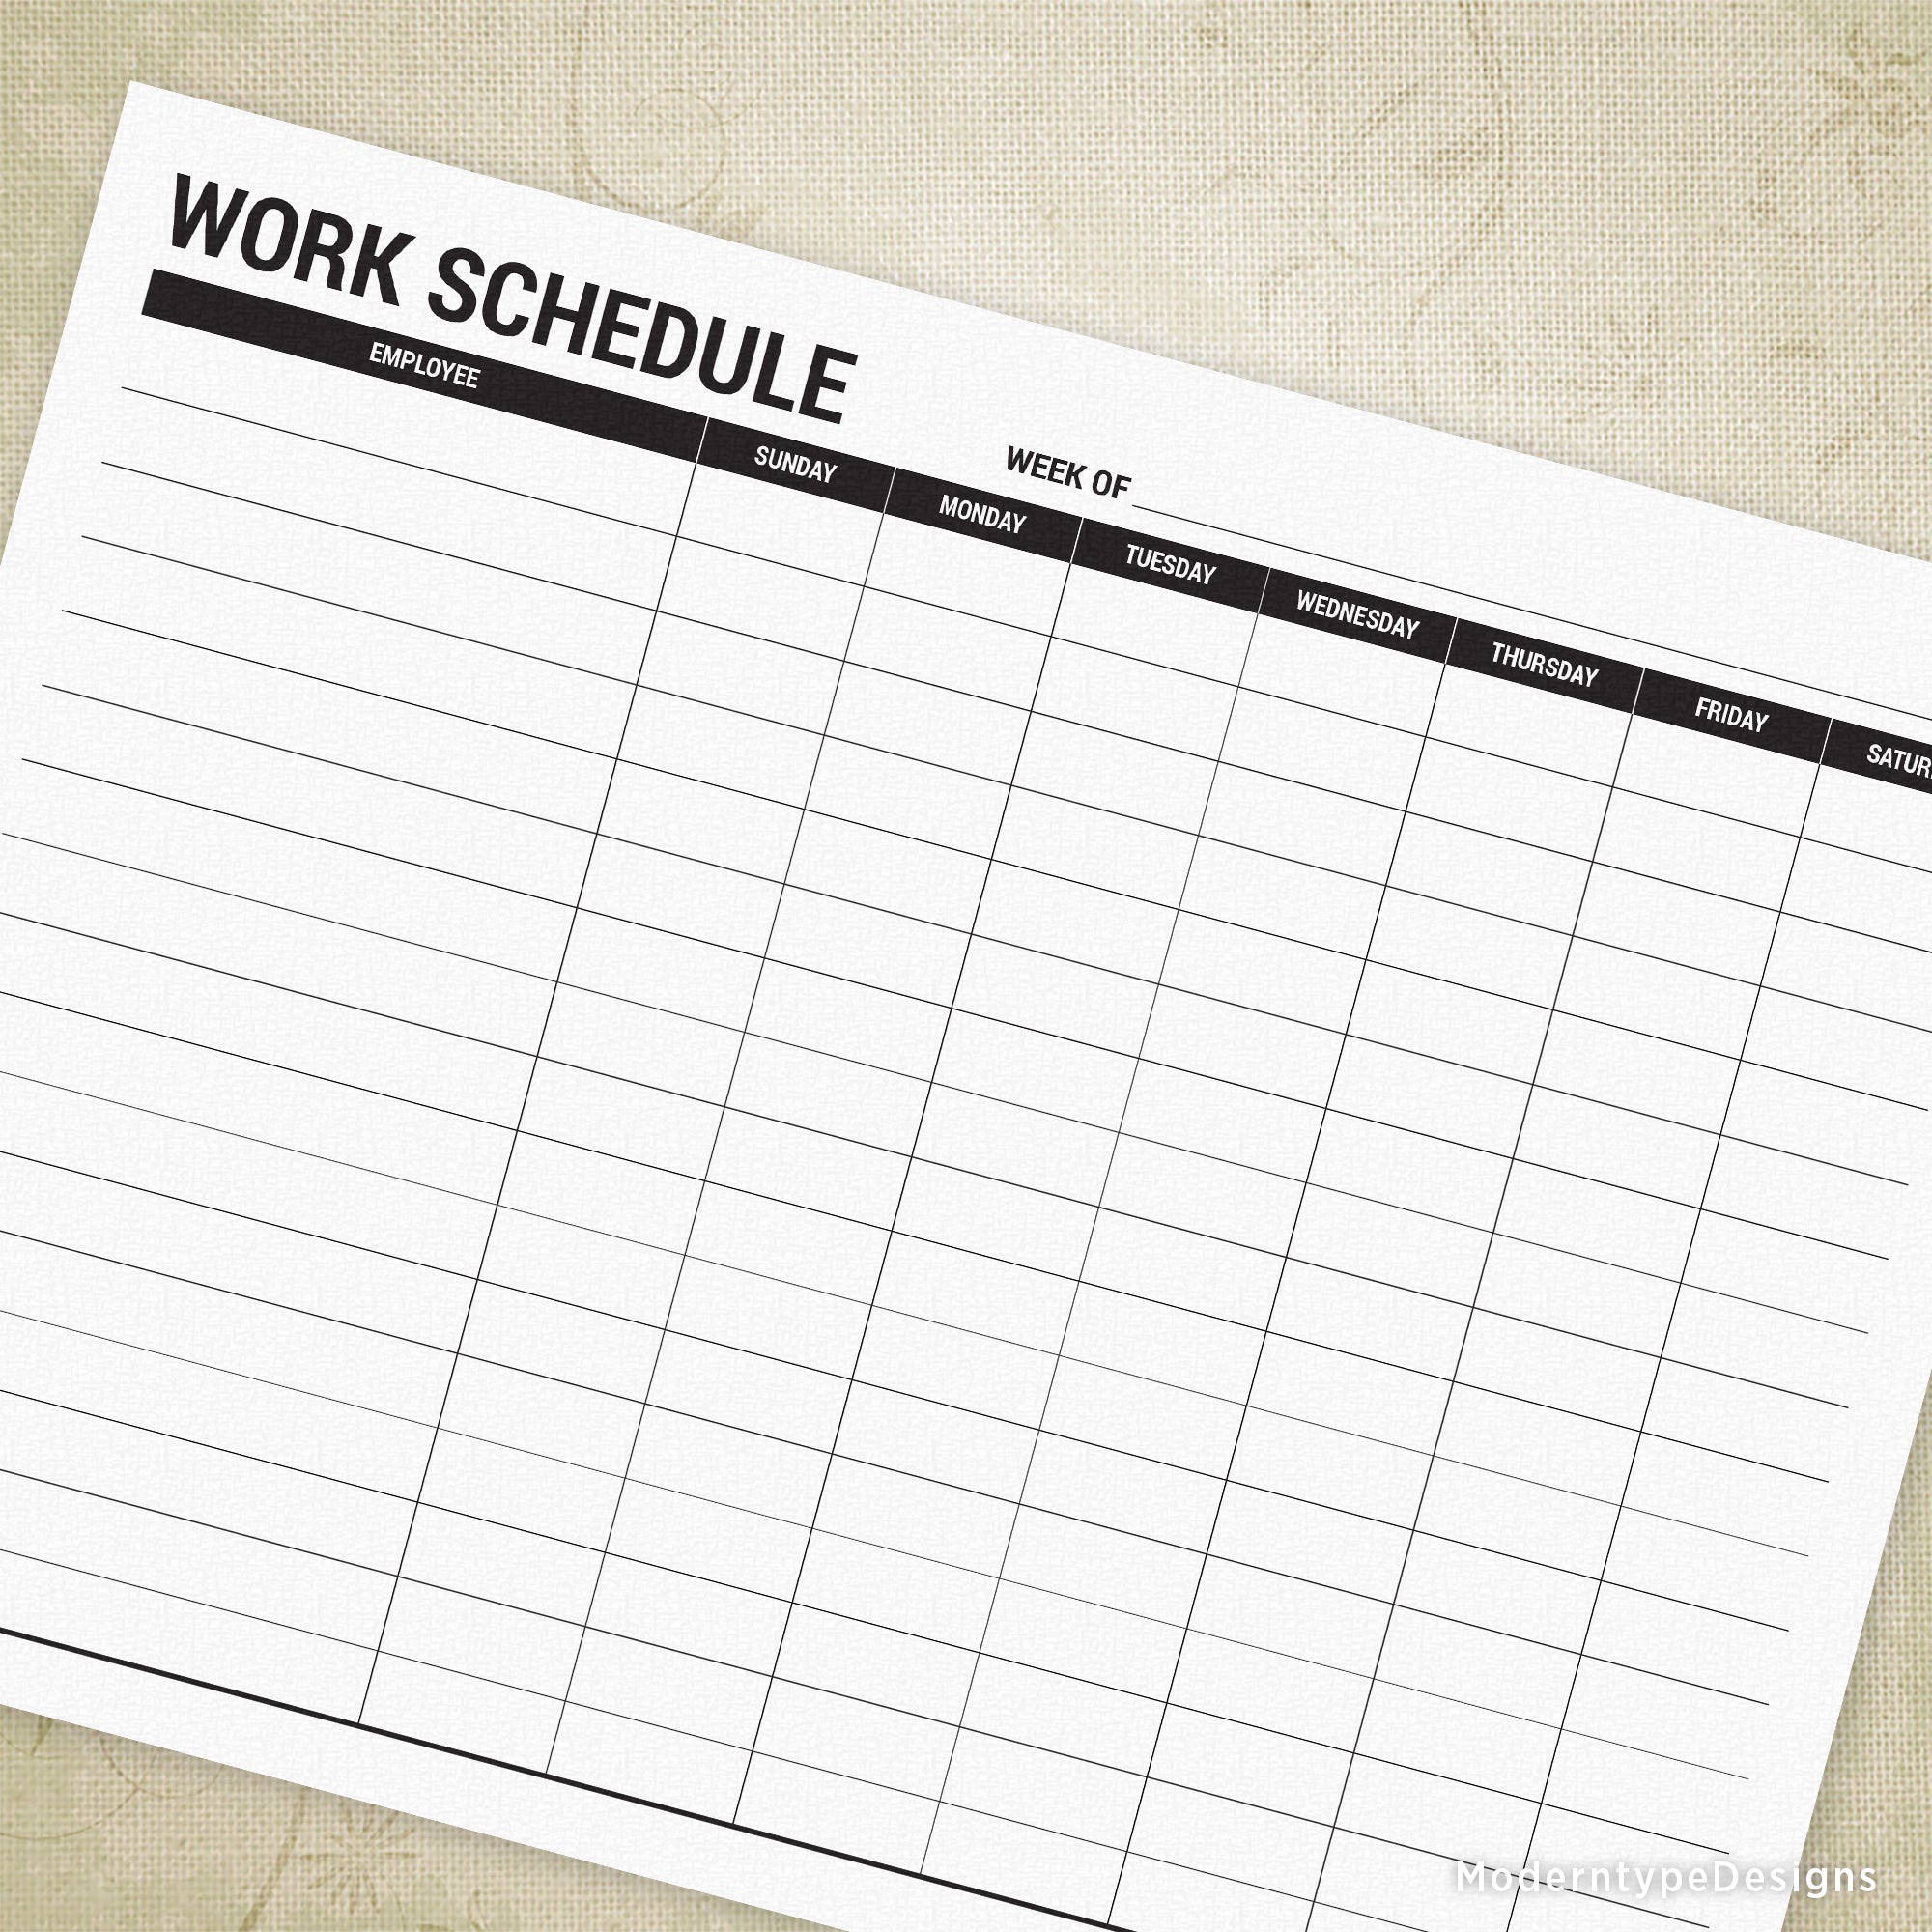 Employee Work Schedule Printable Form #1